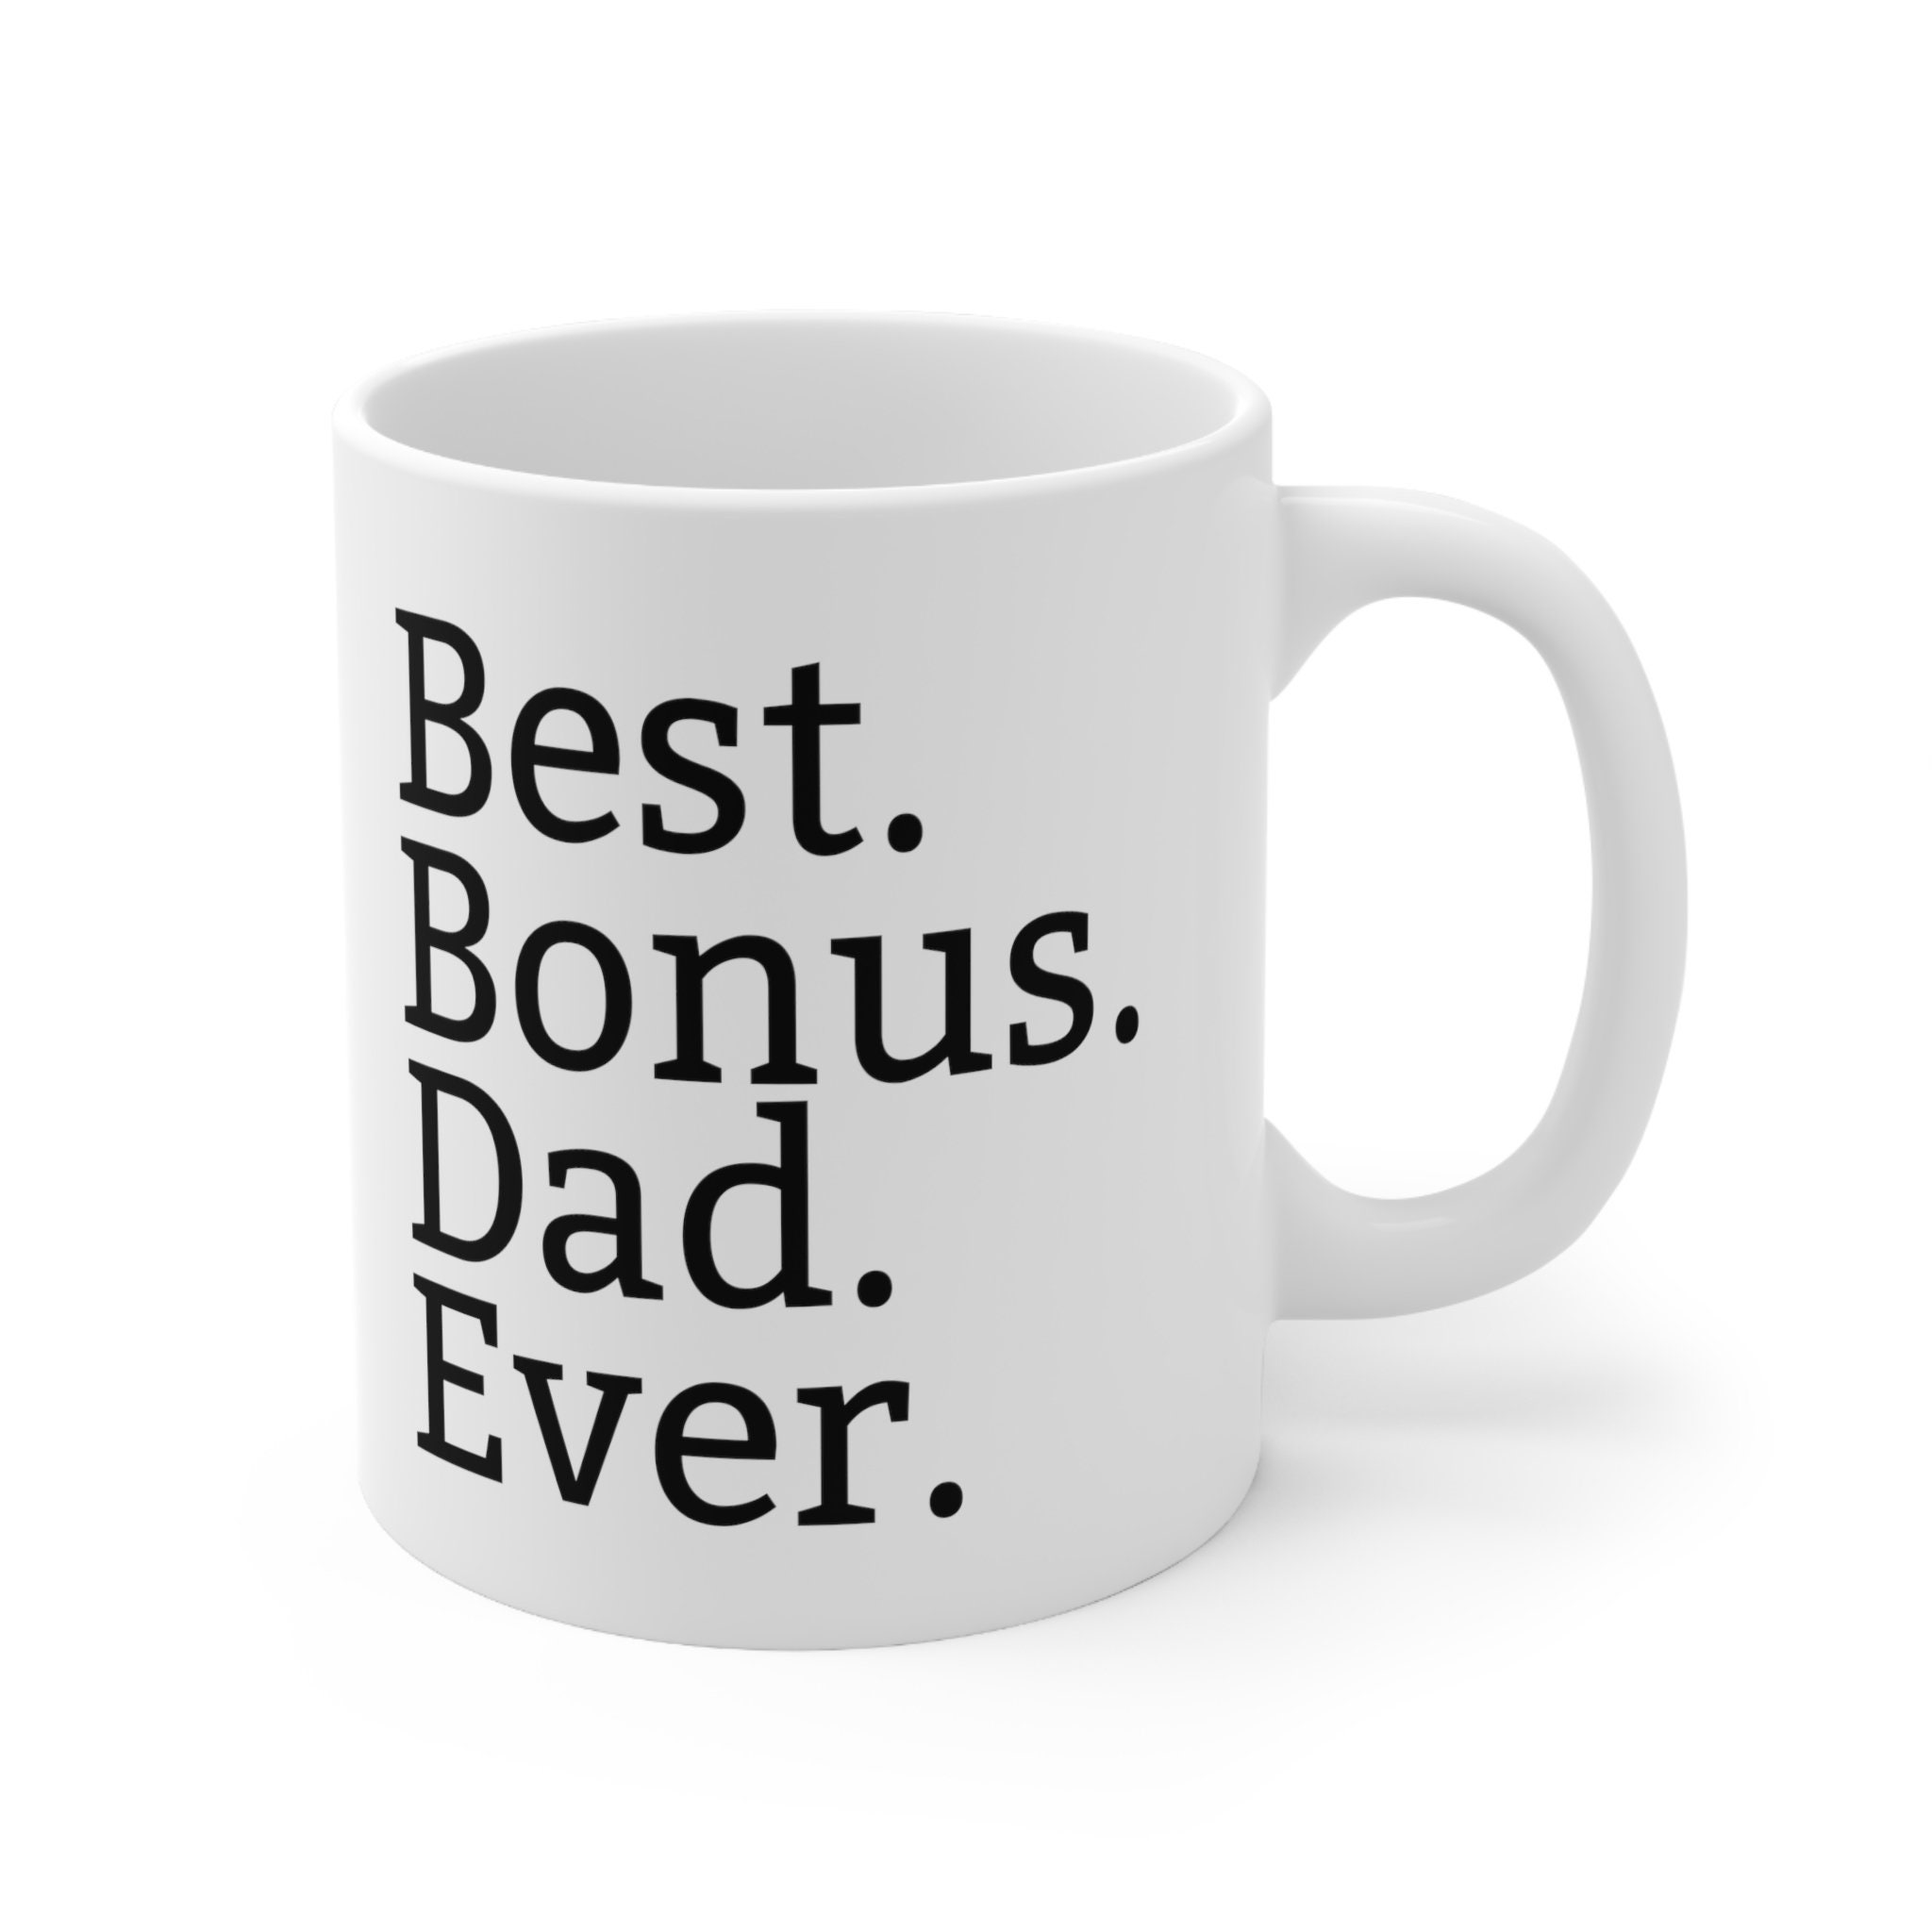 Step Dad Mug, Step Dad Gift, Bonus Dad Gift, Gift for Step Dad, Step Dad Gifts